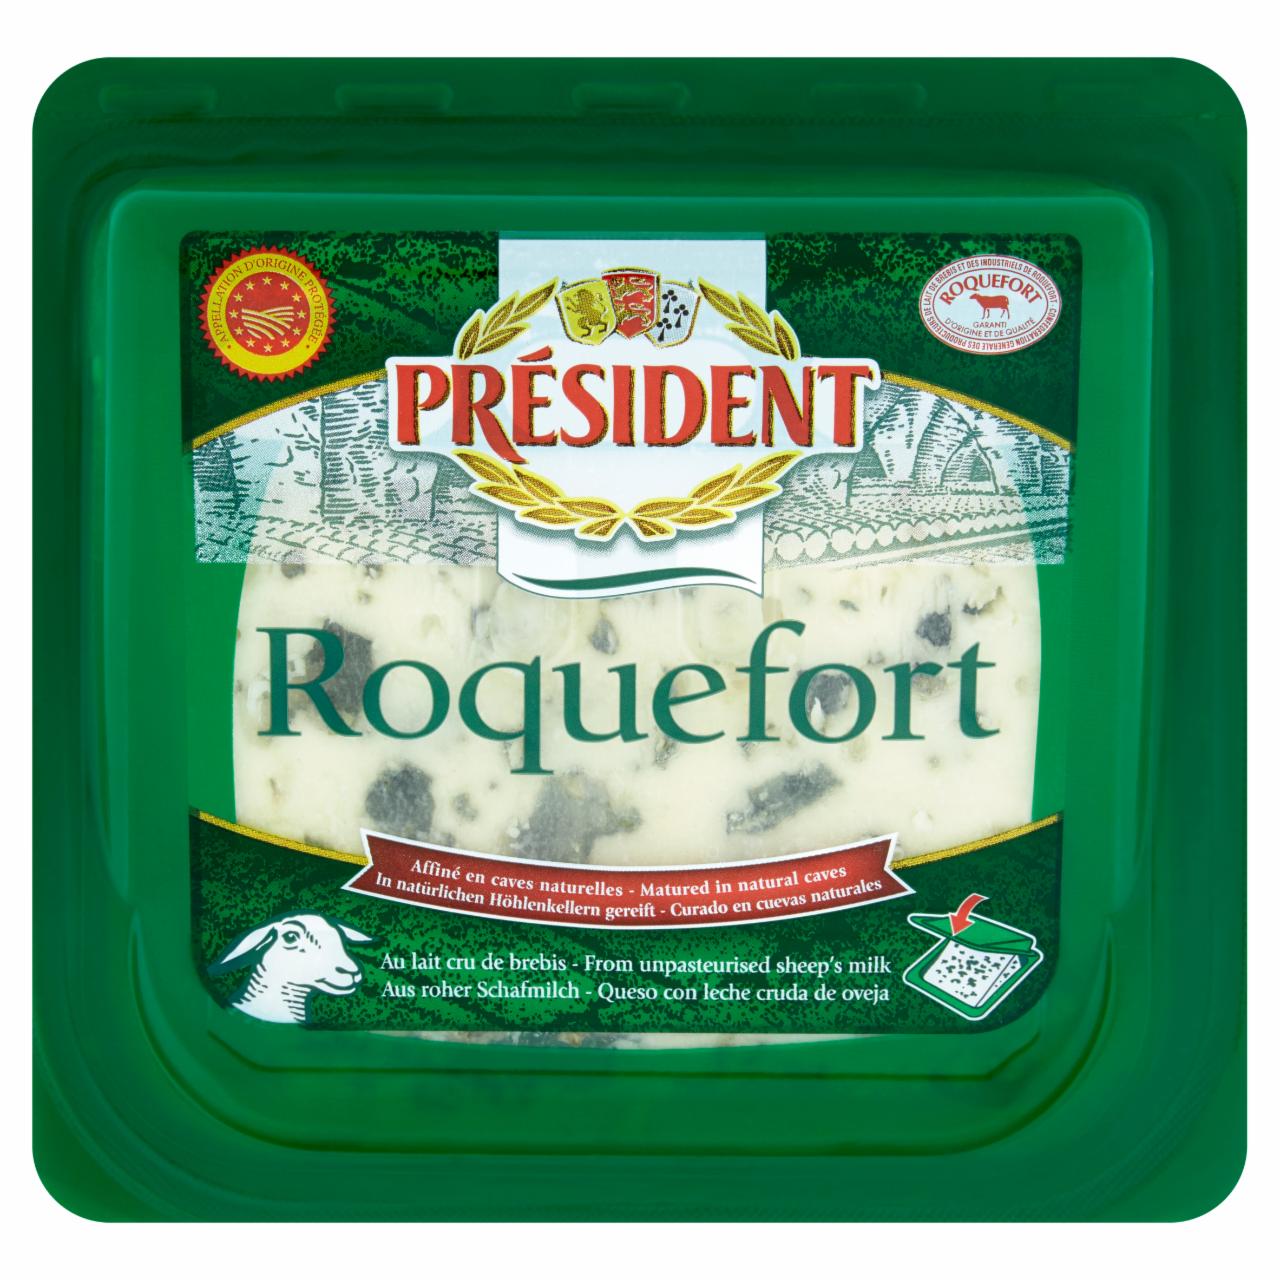 Képek - Président Roquefort sajt 100 g